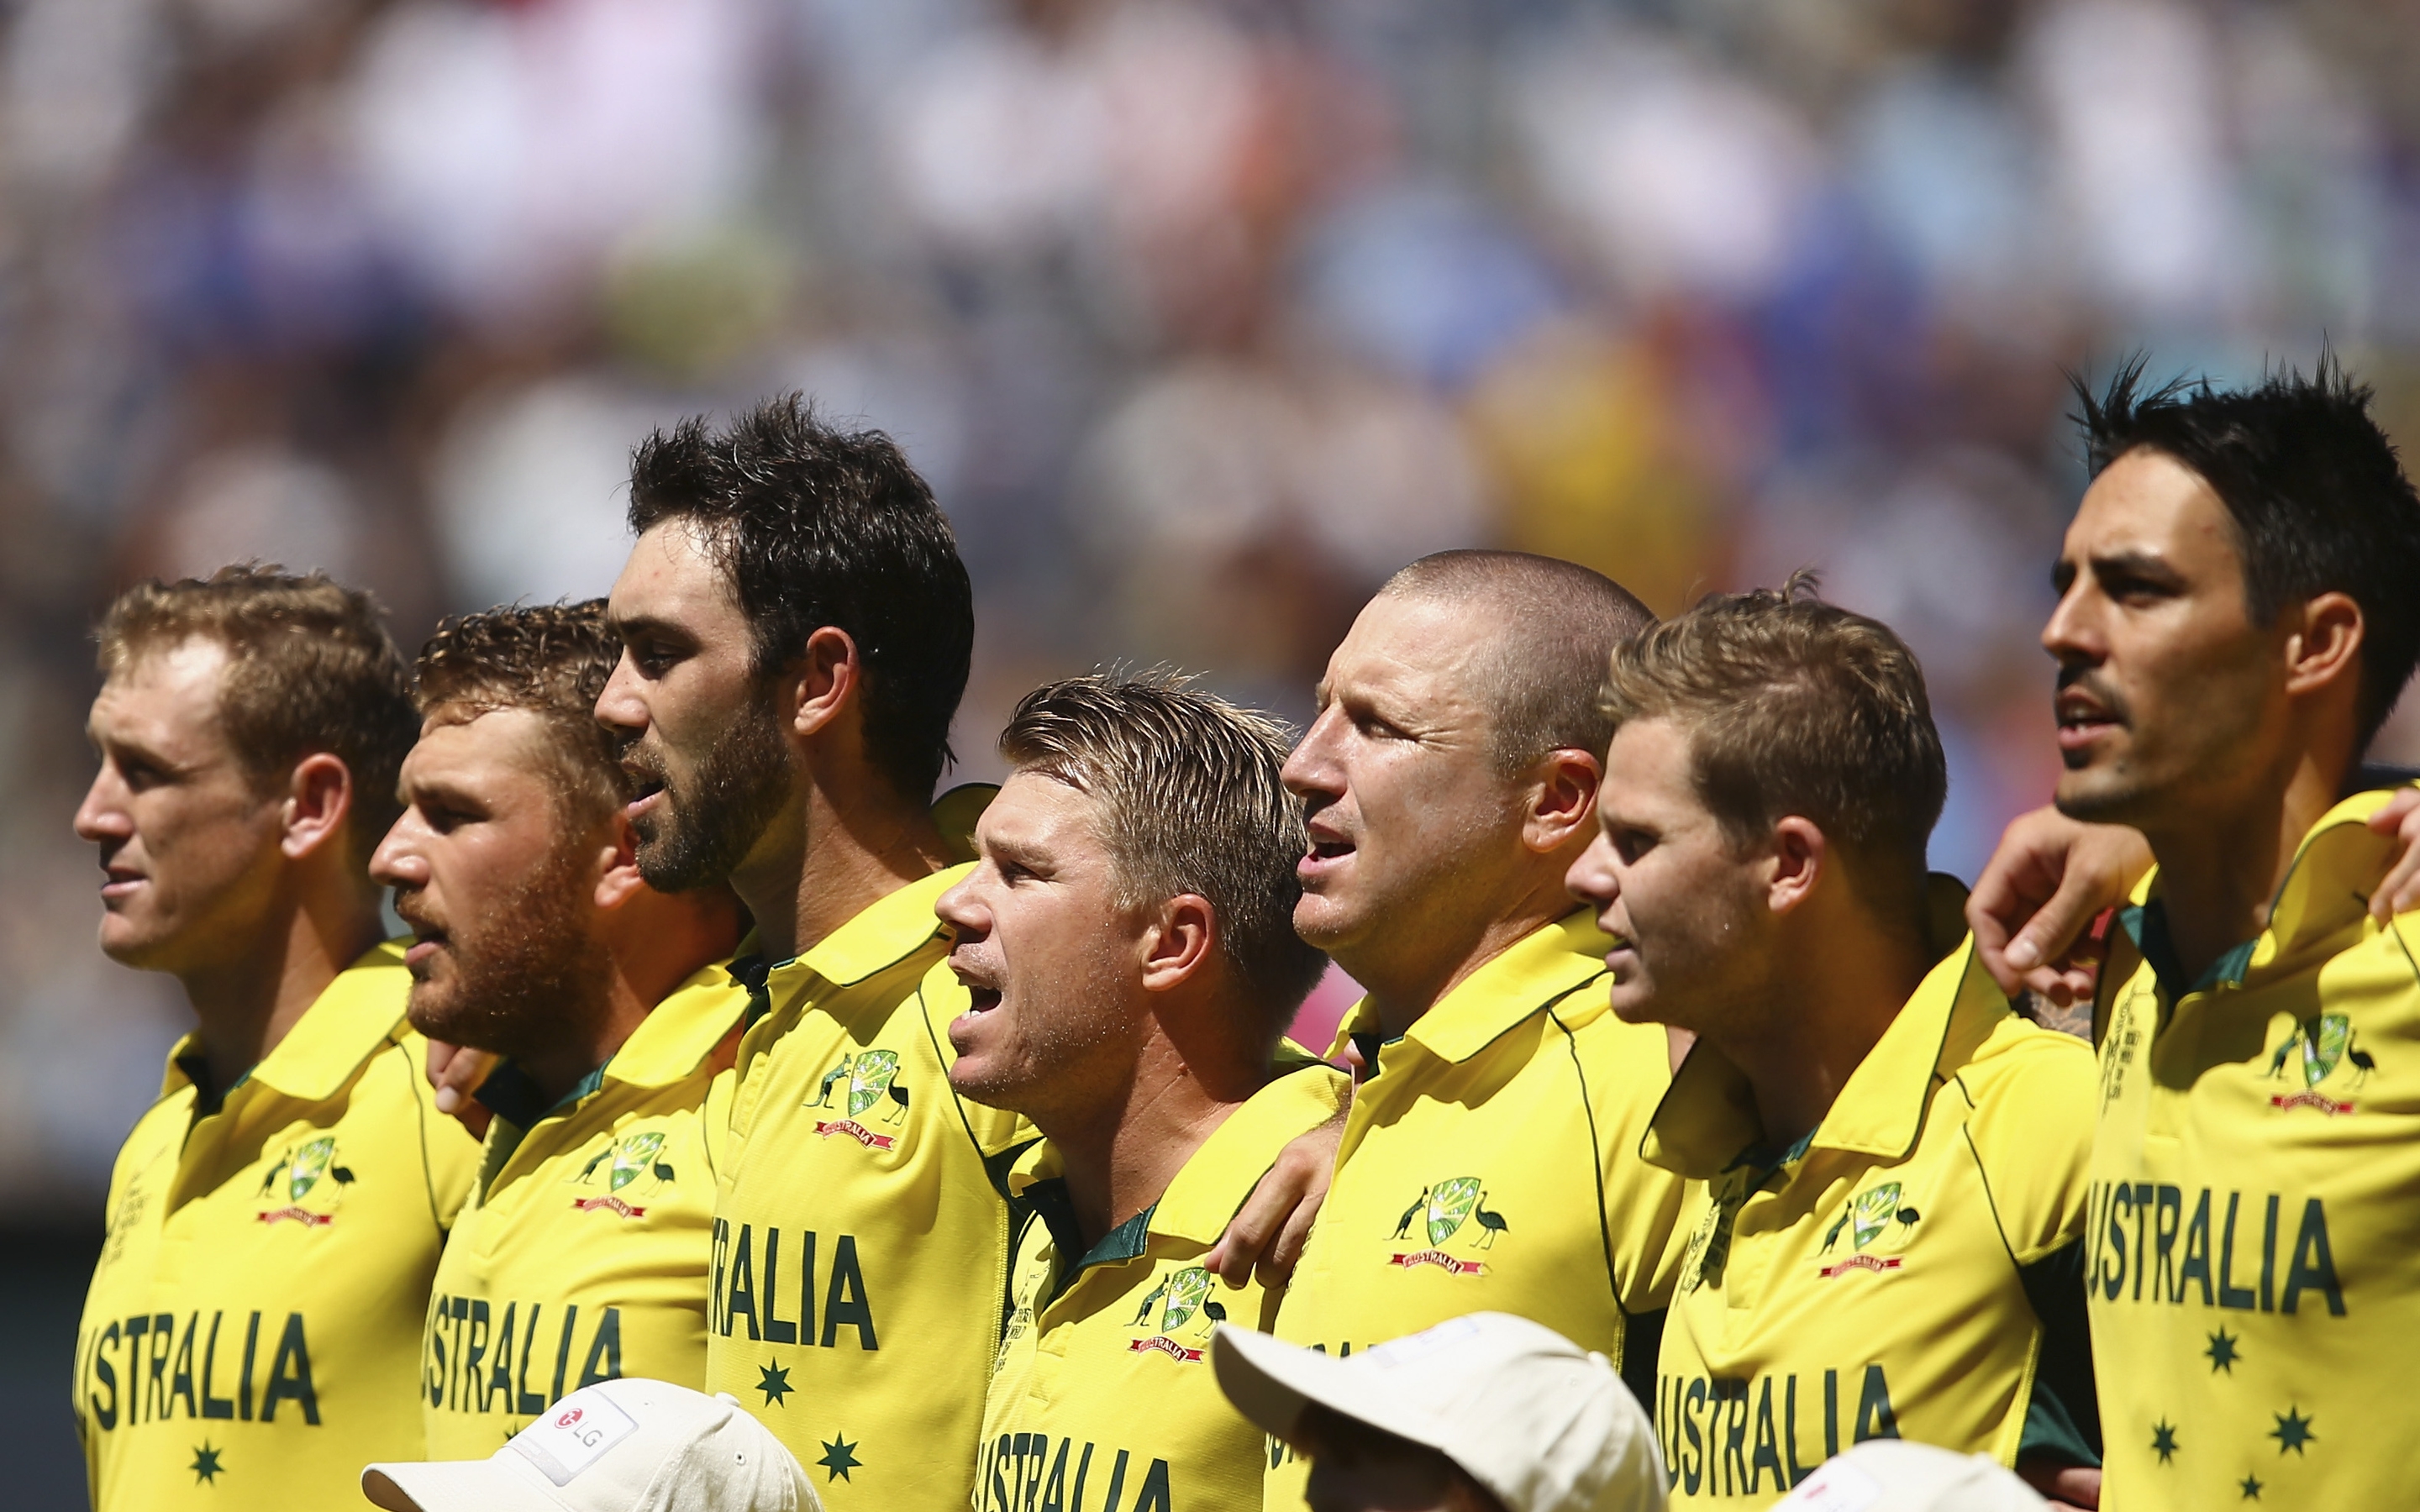 Australia Cricket Team for 2880 x 1800 Retina Display resolution